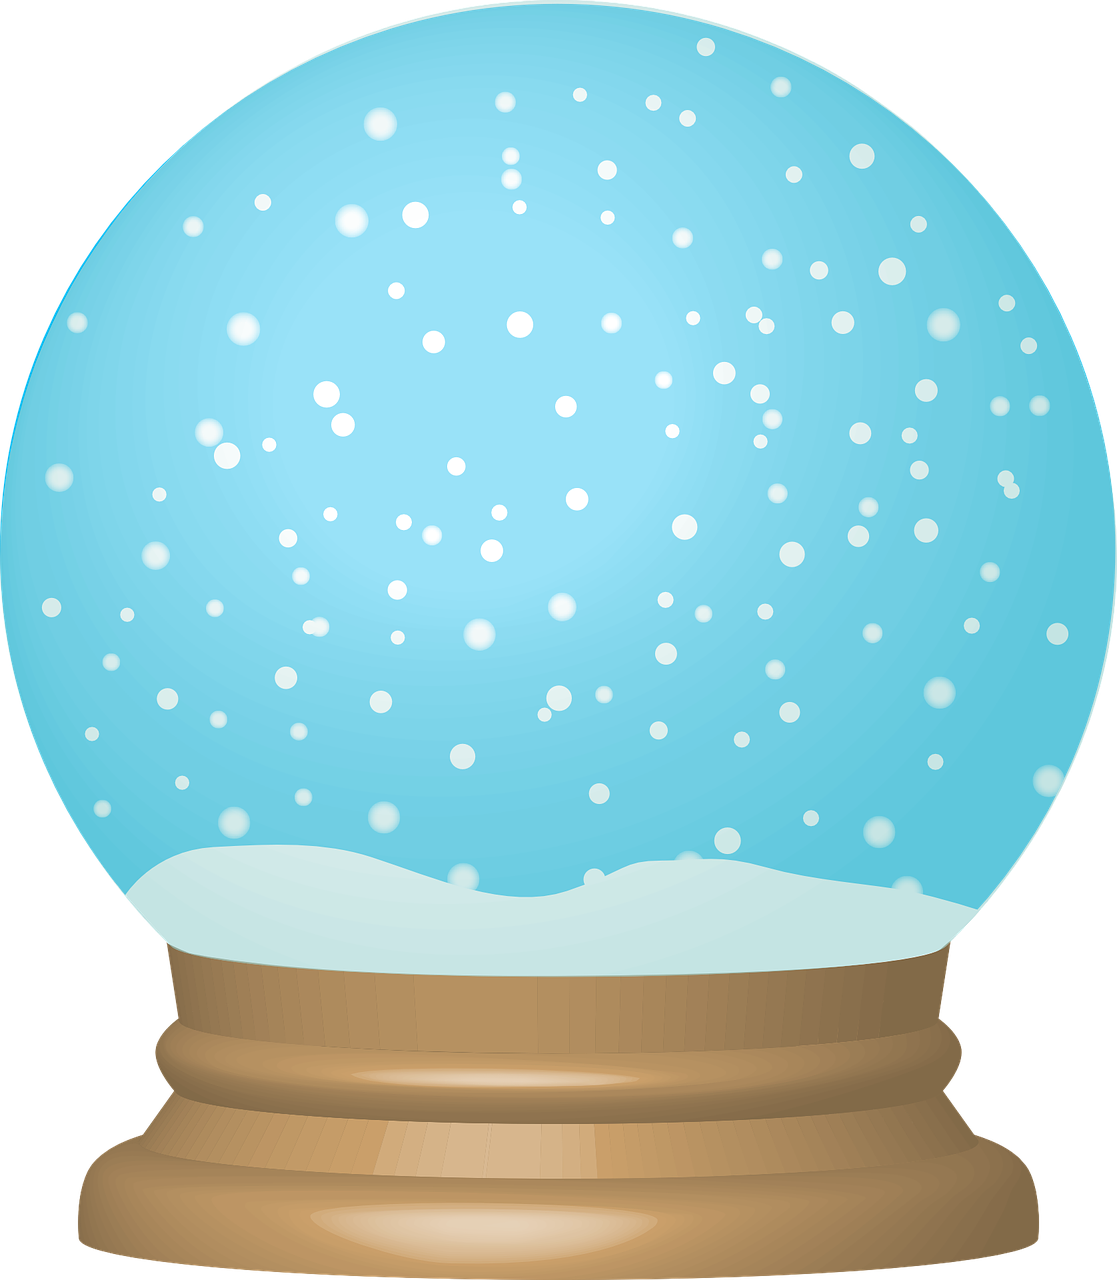 Snow Ball, Snow, White, December, Snow Crystals, Winter - Snowglobe Clipart (1117x1280)